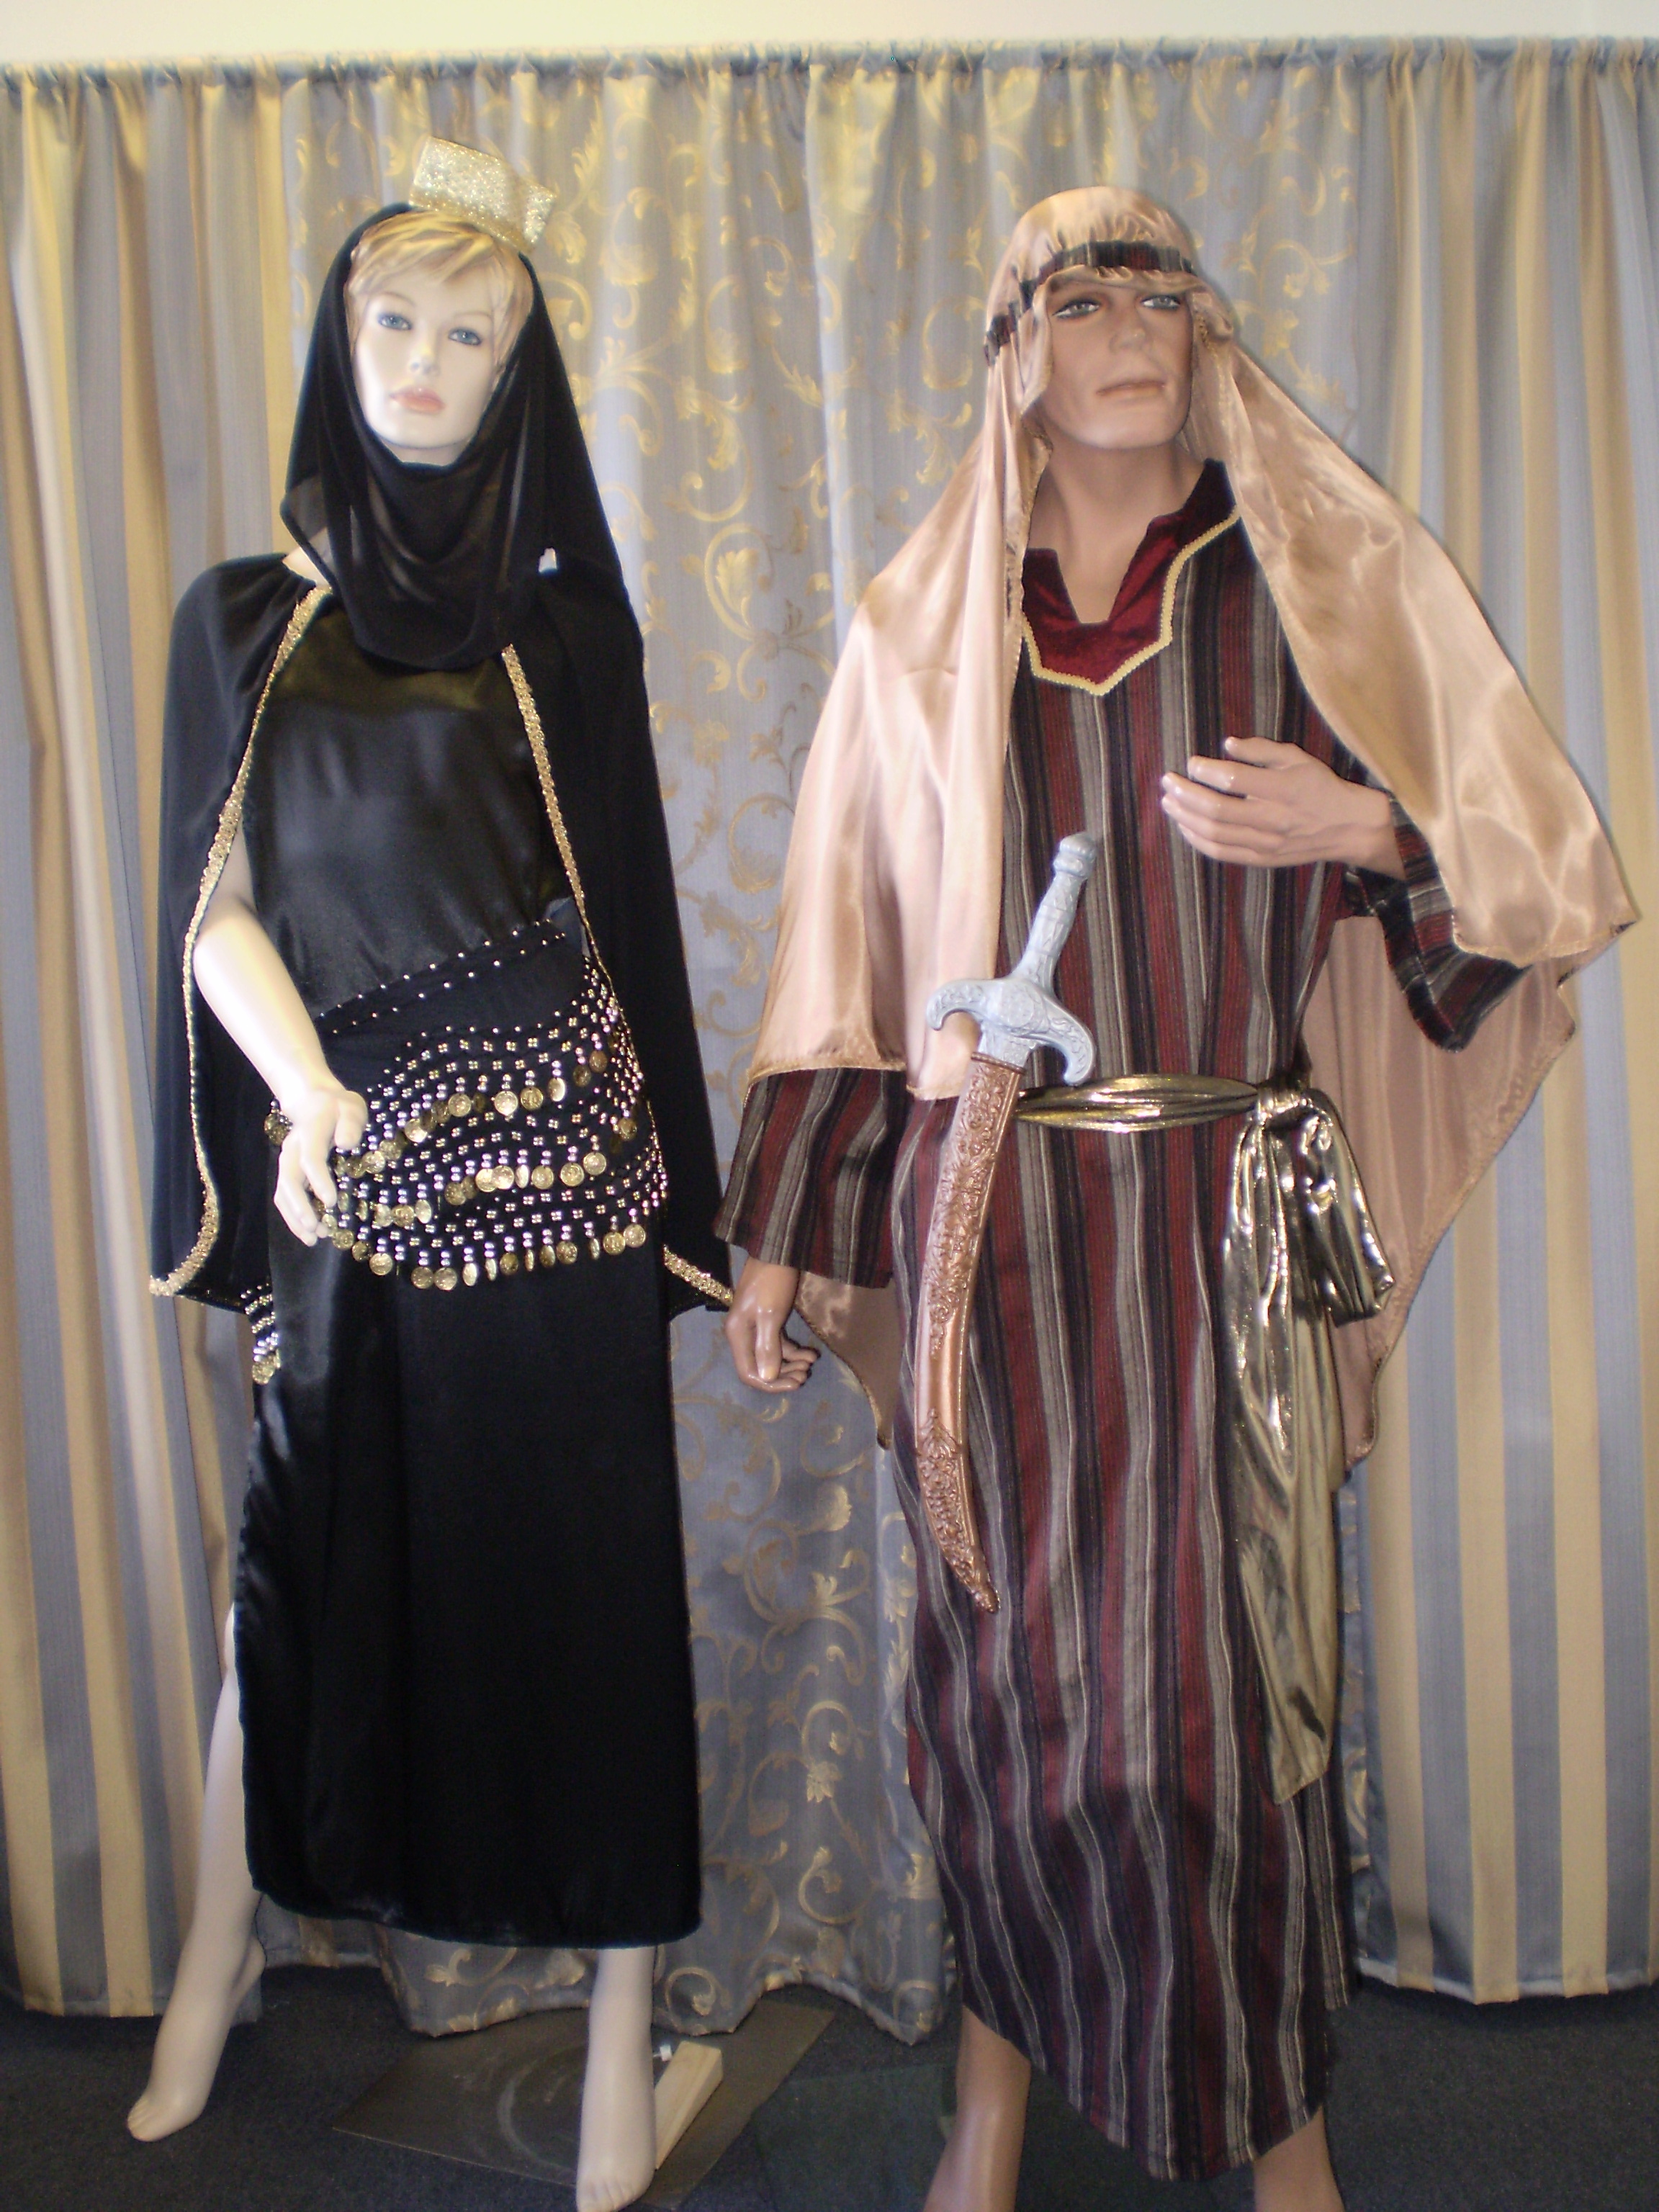 Arabian nights costumes from Harem girls to Sheikhs